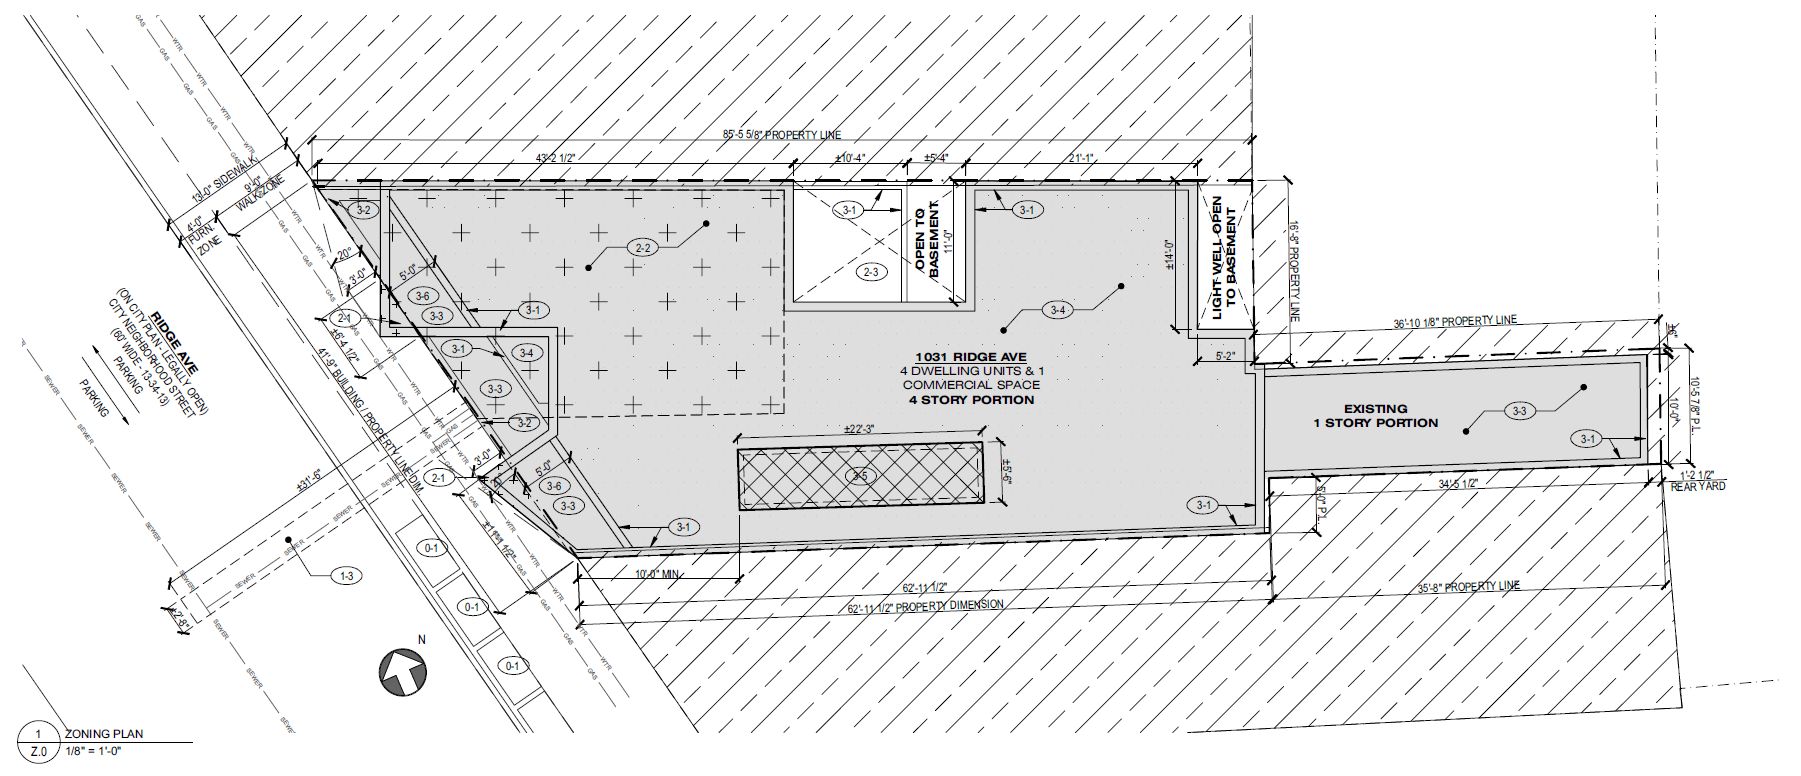 1031-33 Ridge Avenue. Site plan. Credit: HDO Architecture via the City of Philadelphia